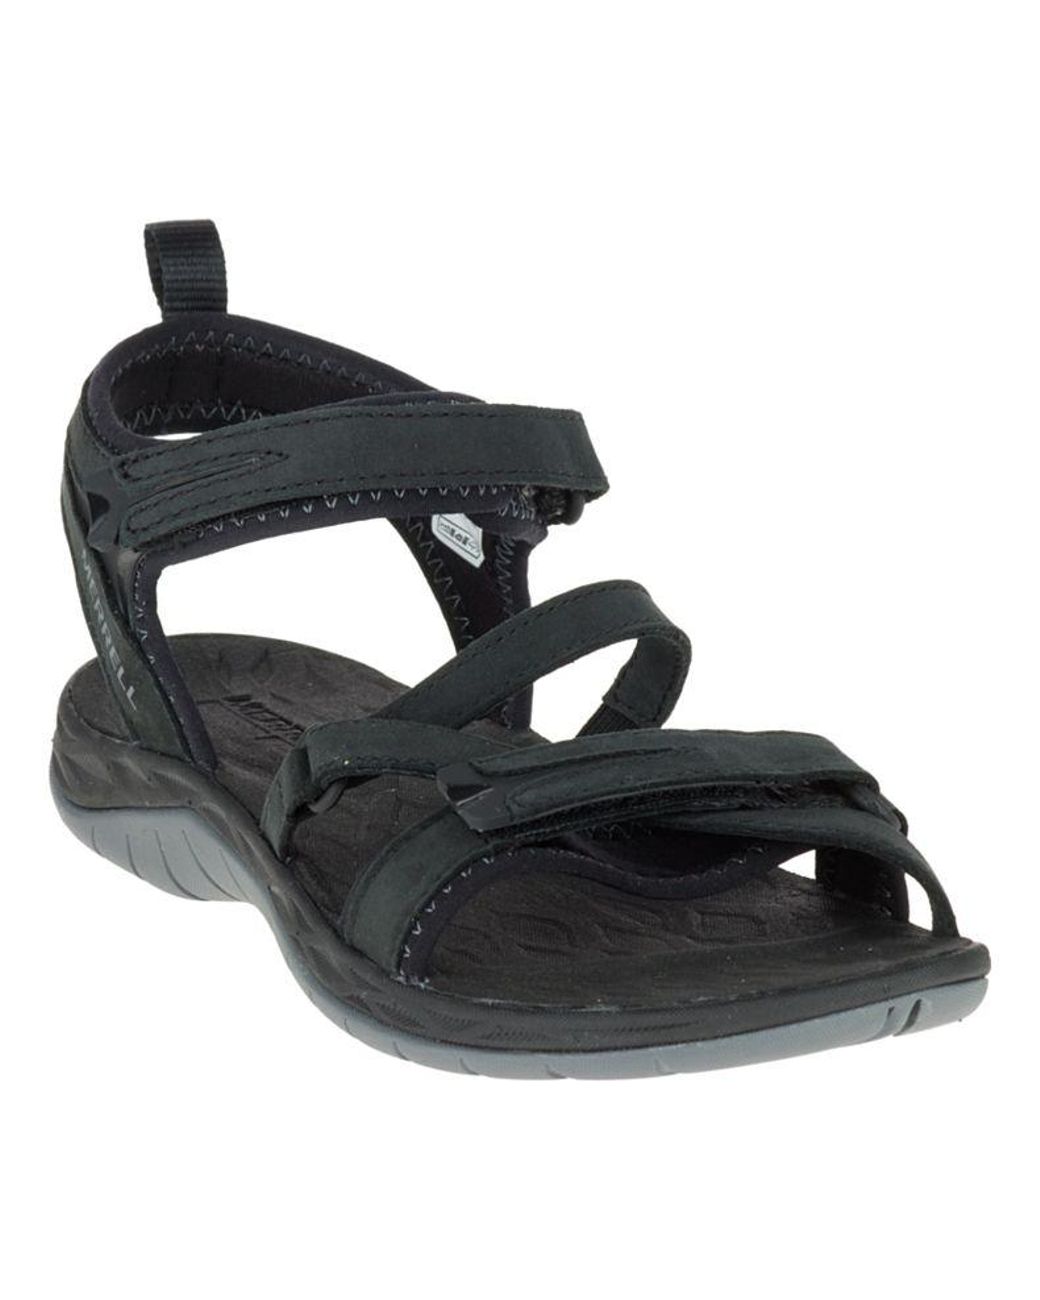 Merrell Siren Strap Q2 Waterproof Leather Walking Sandals in Black | Lyst